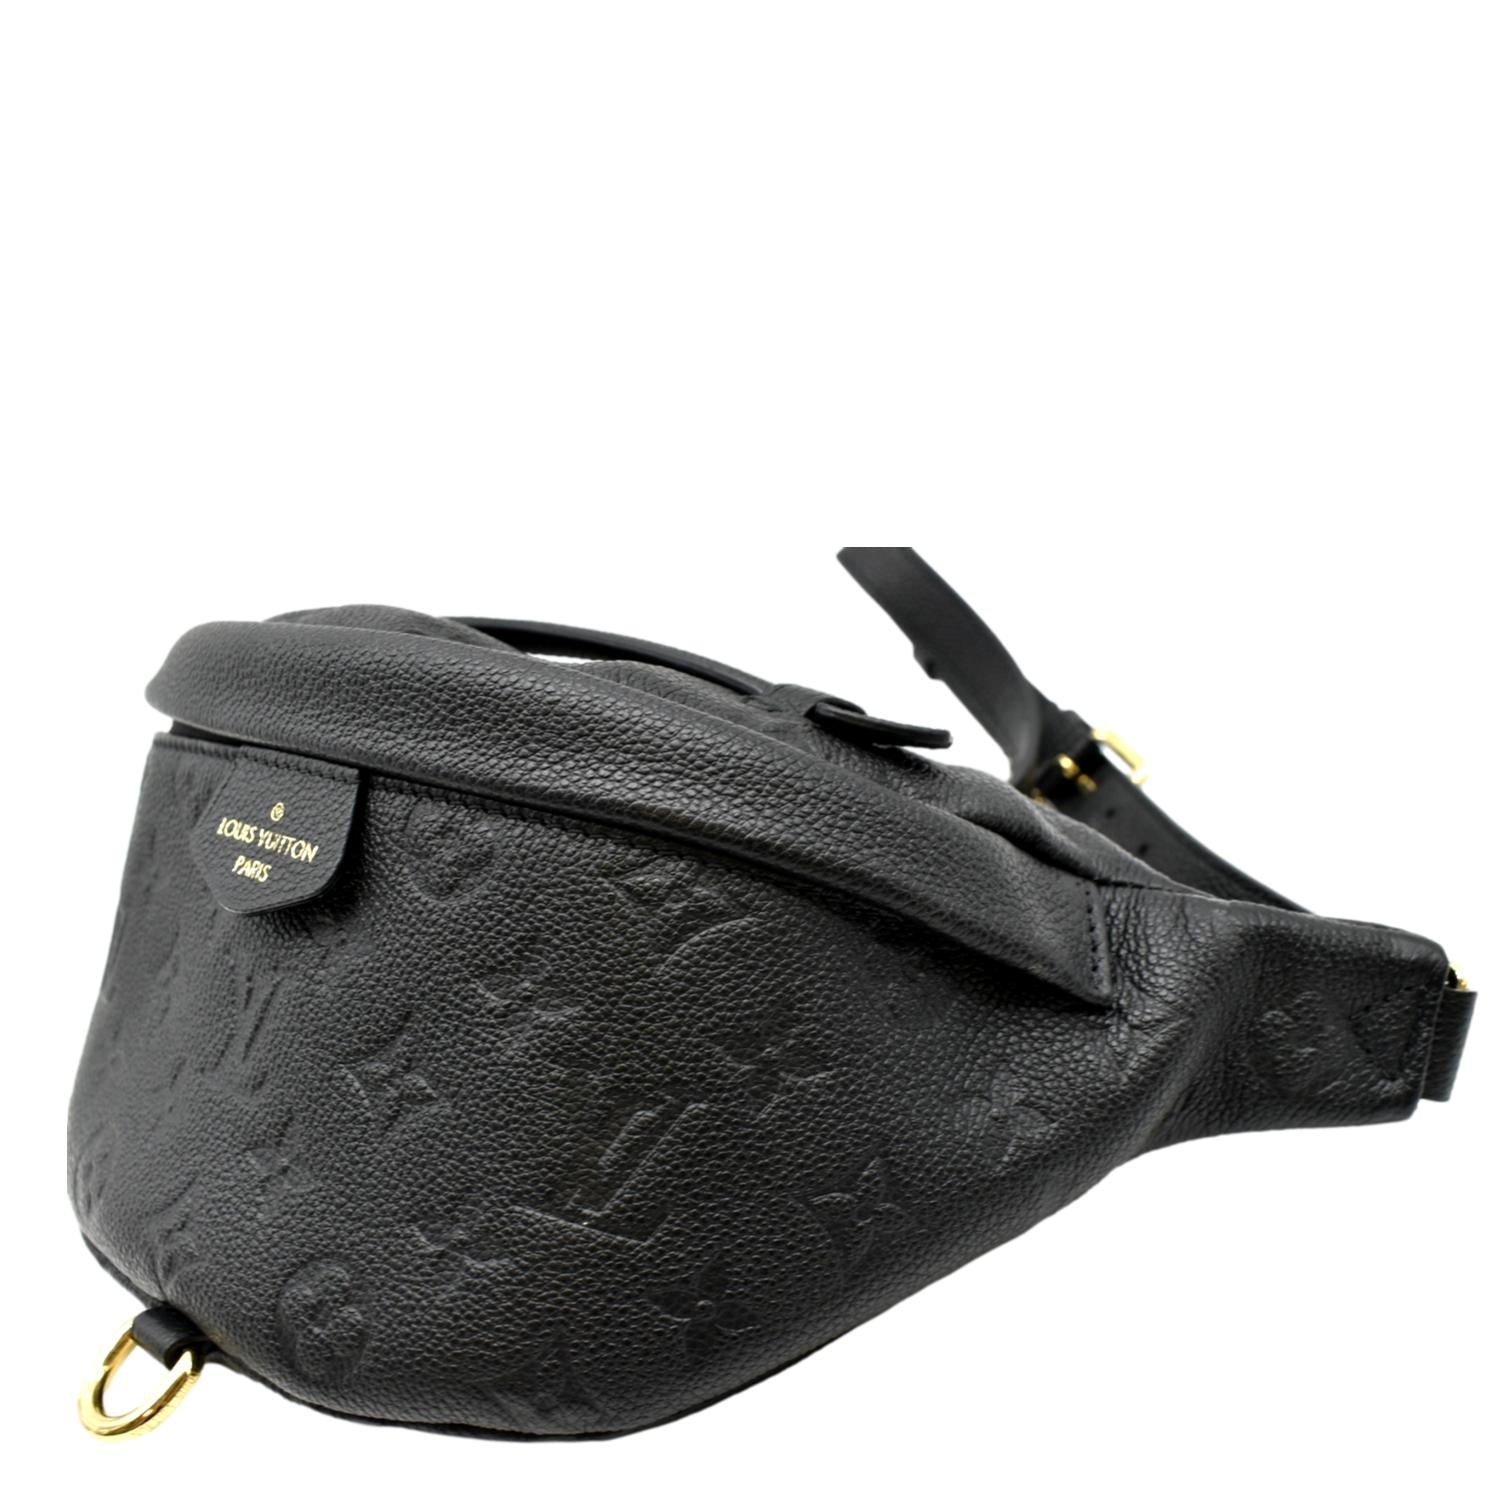 Louis Vuitton Black Monogram Empreinte Leather Bumbag Belt